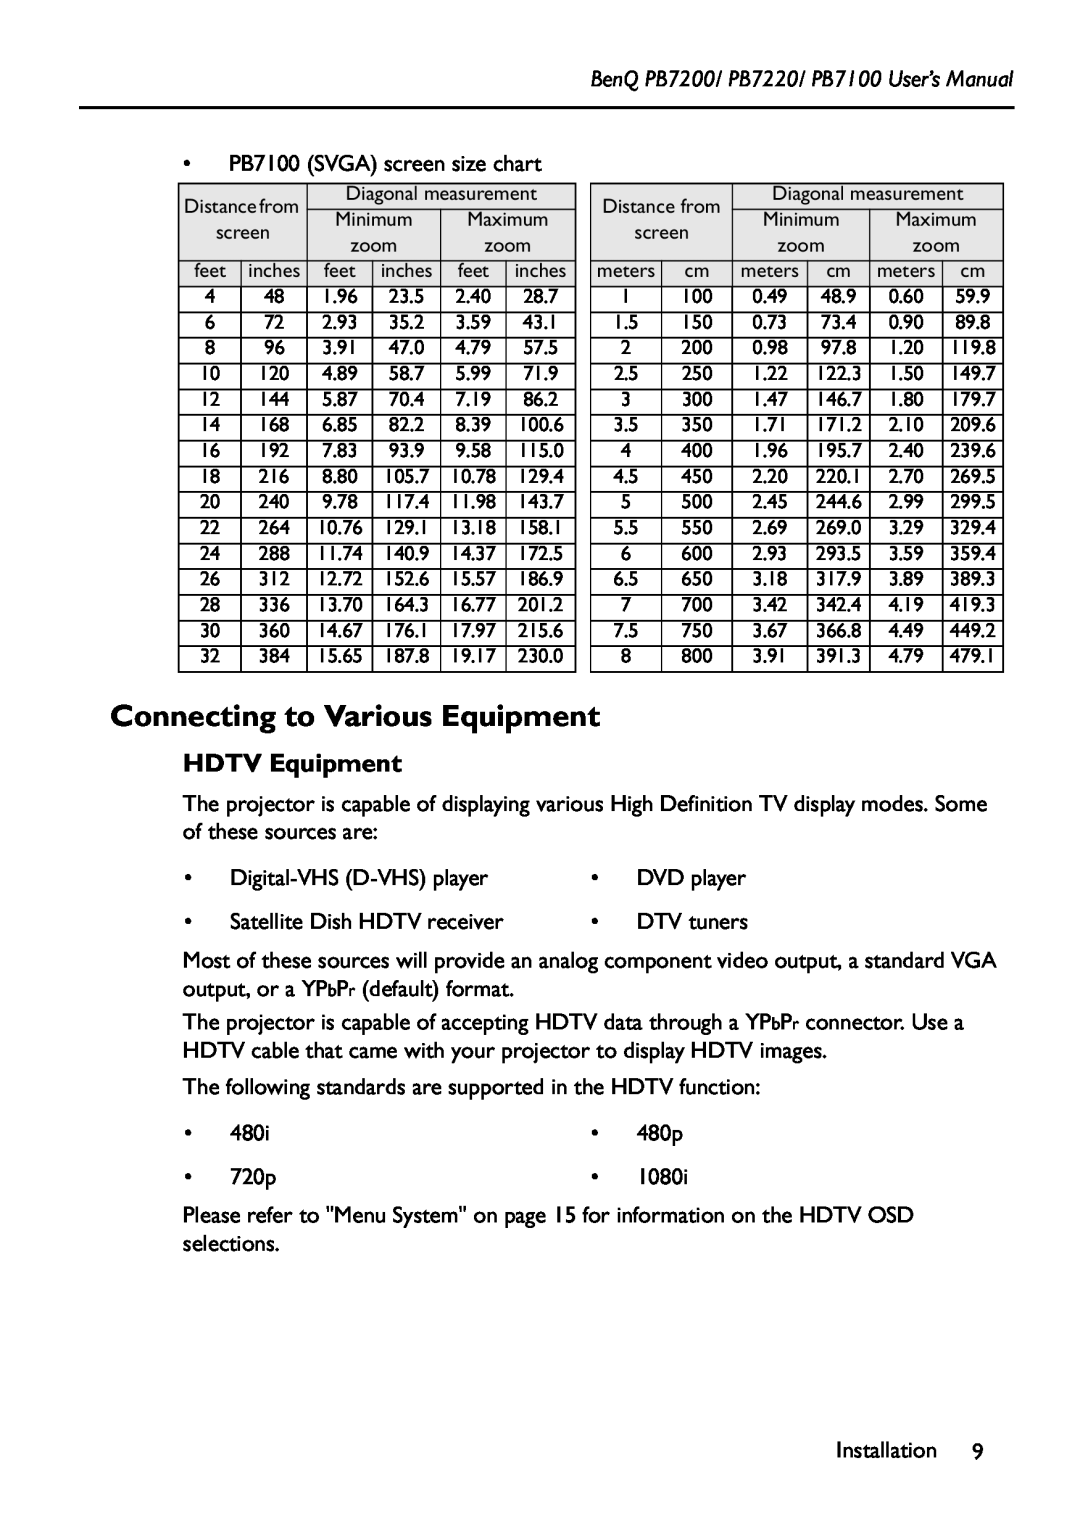 BenQ PB7200 manual Connecting to Various Equipment, HDTV Equipment 